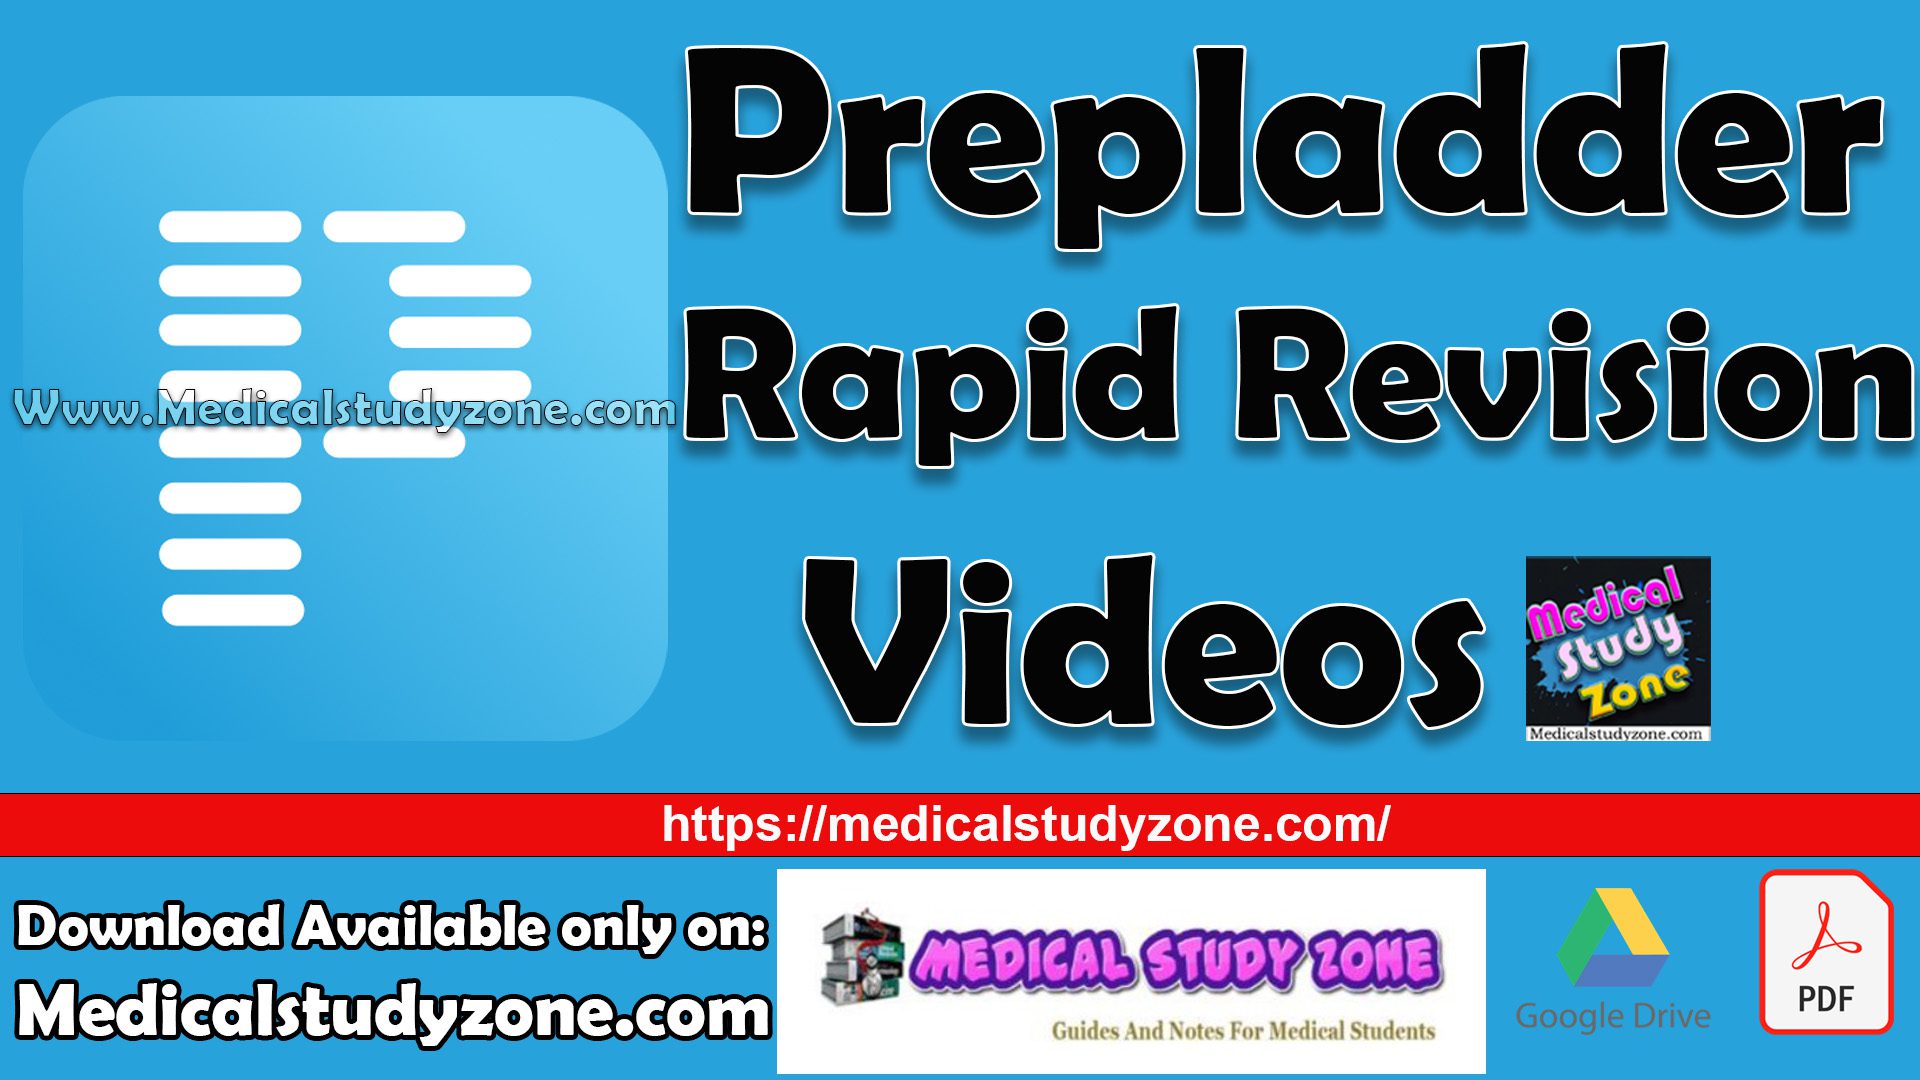 Prepladder Rapid Revision Videos Free Download